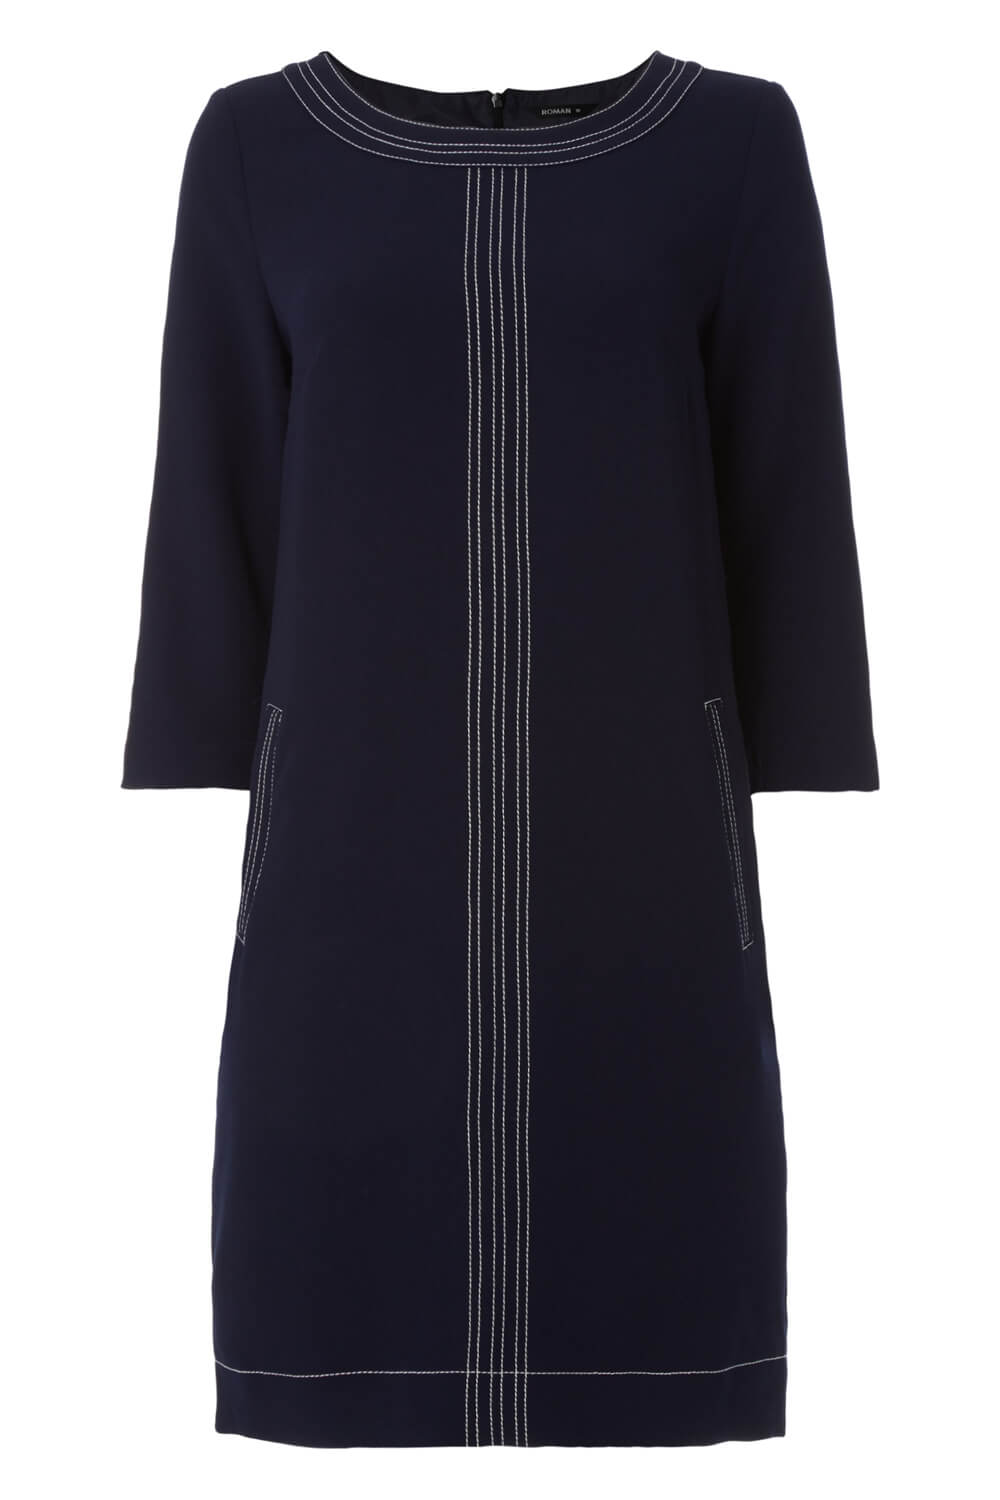 3/4 Sleeve Top Stitch Shift Dress in Navy - Roman Originals UK